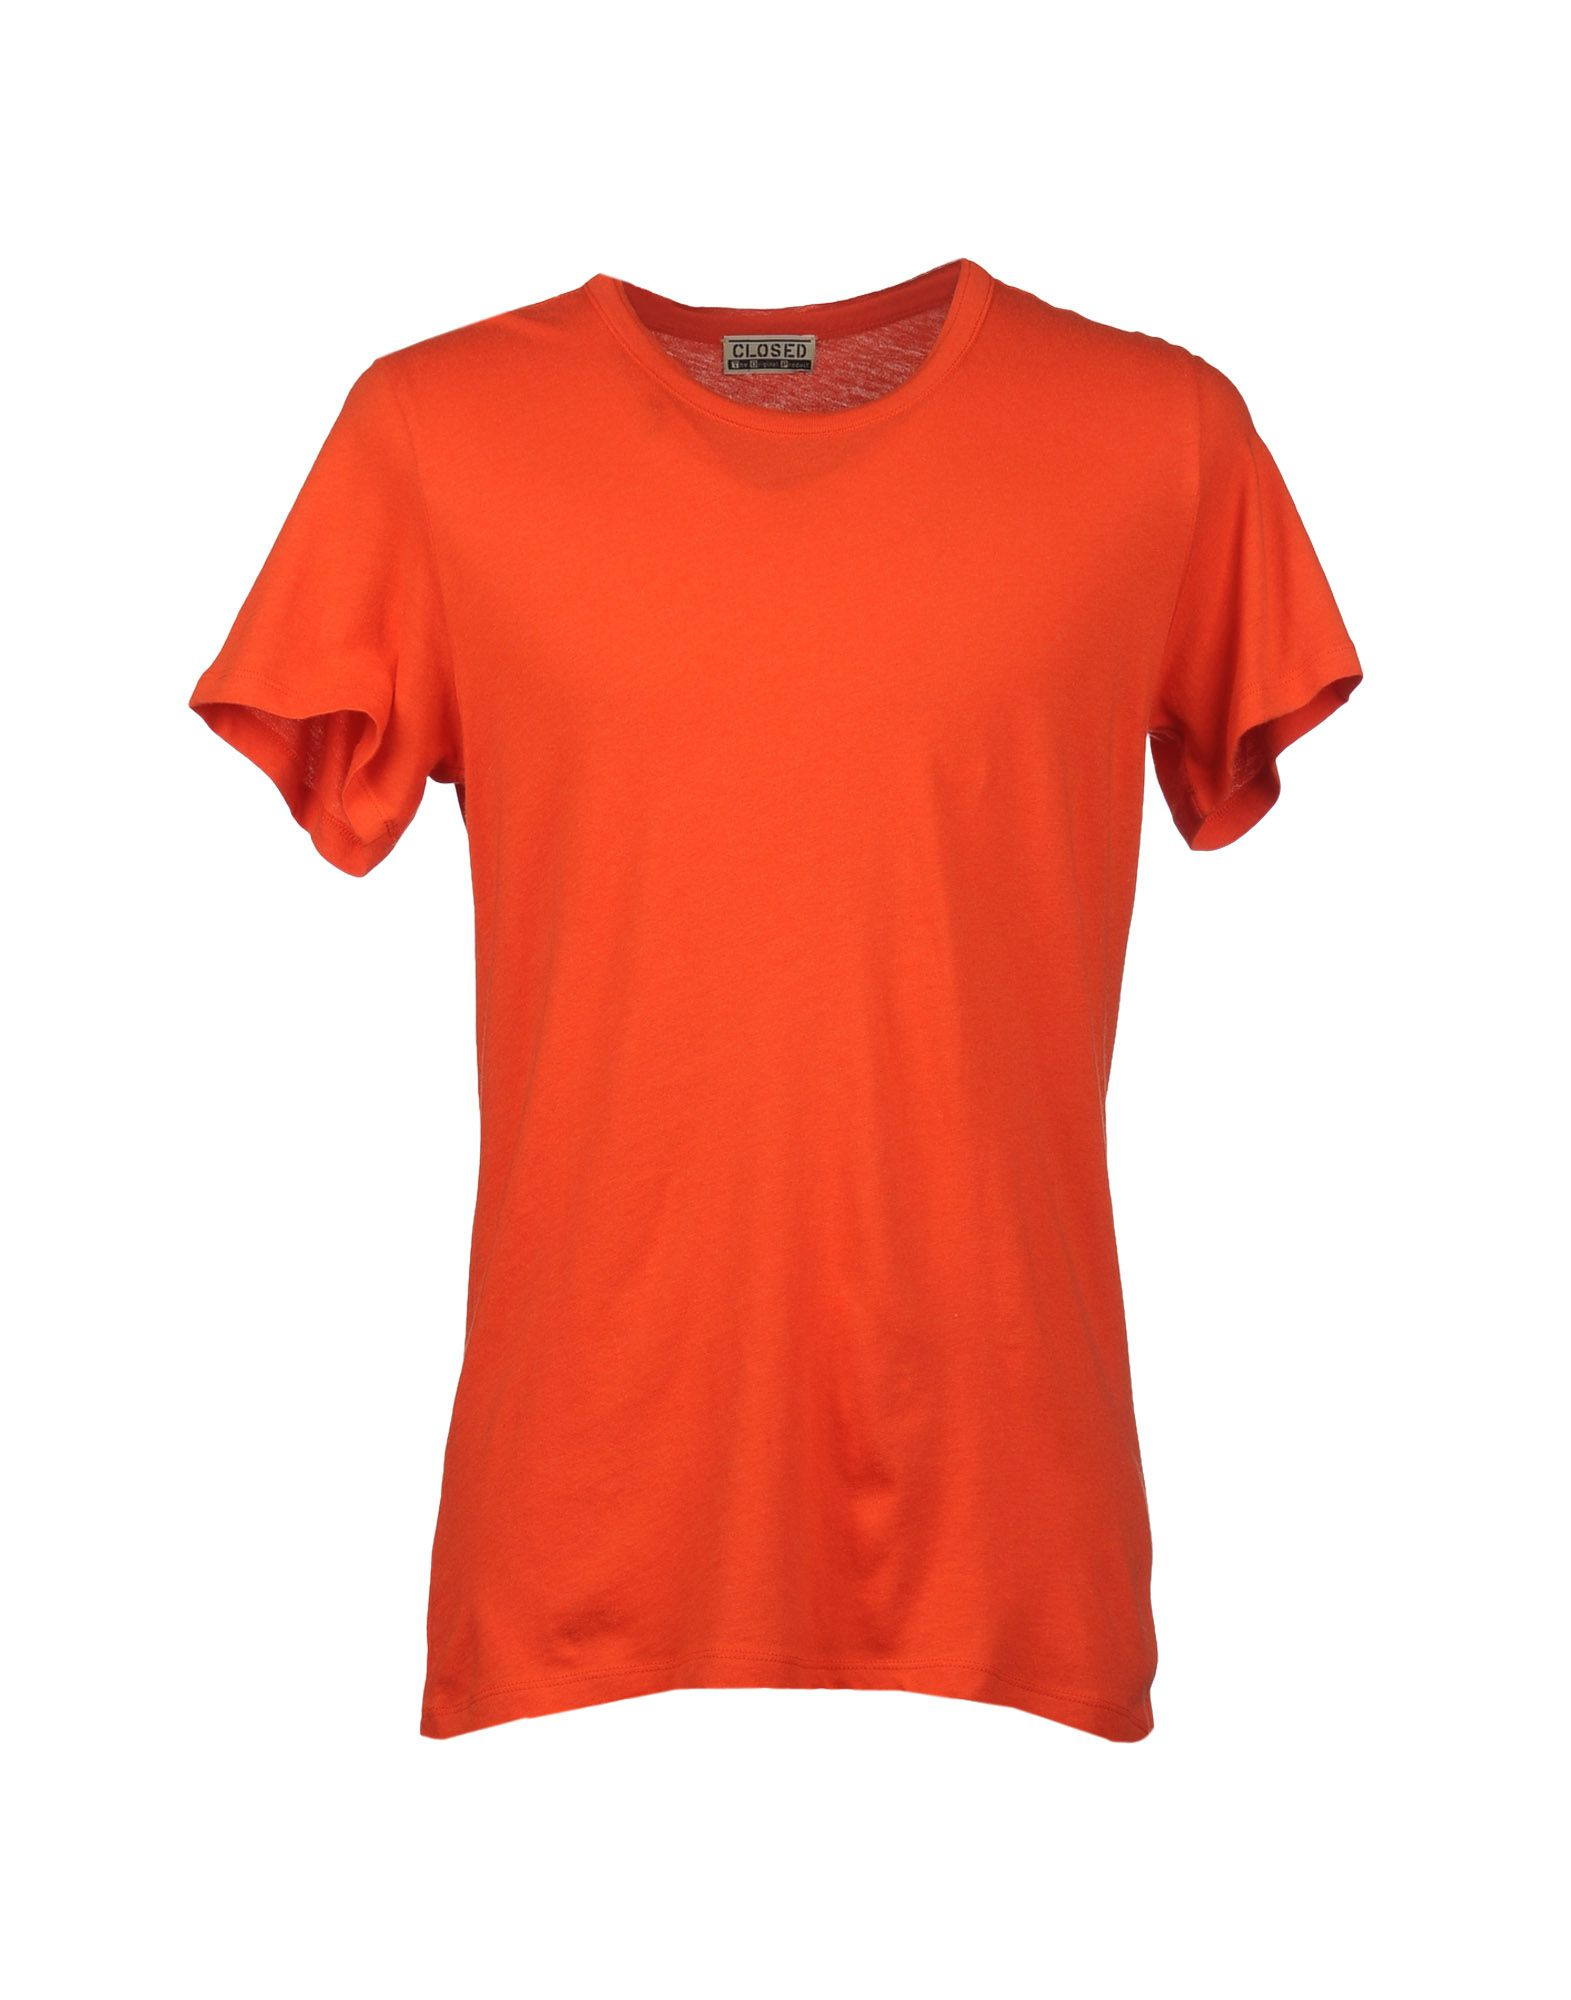 Lyst - Closed Short Sleeve T-shirt in Orange for Men